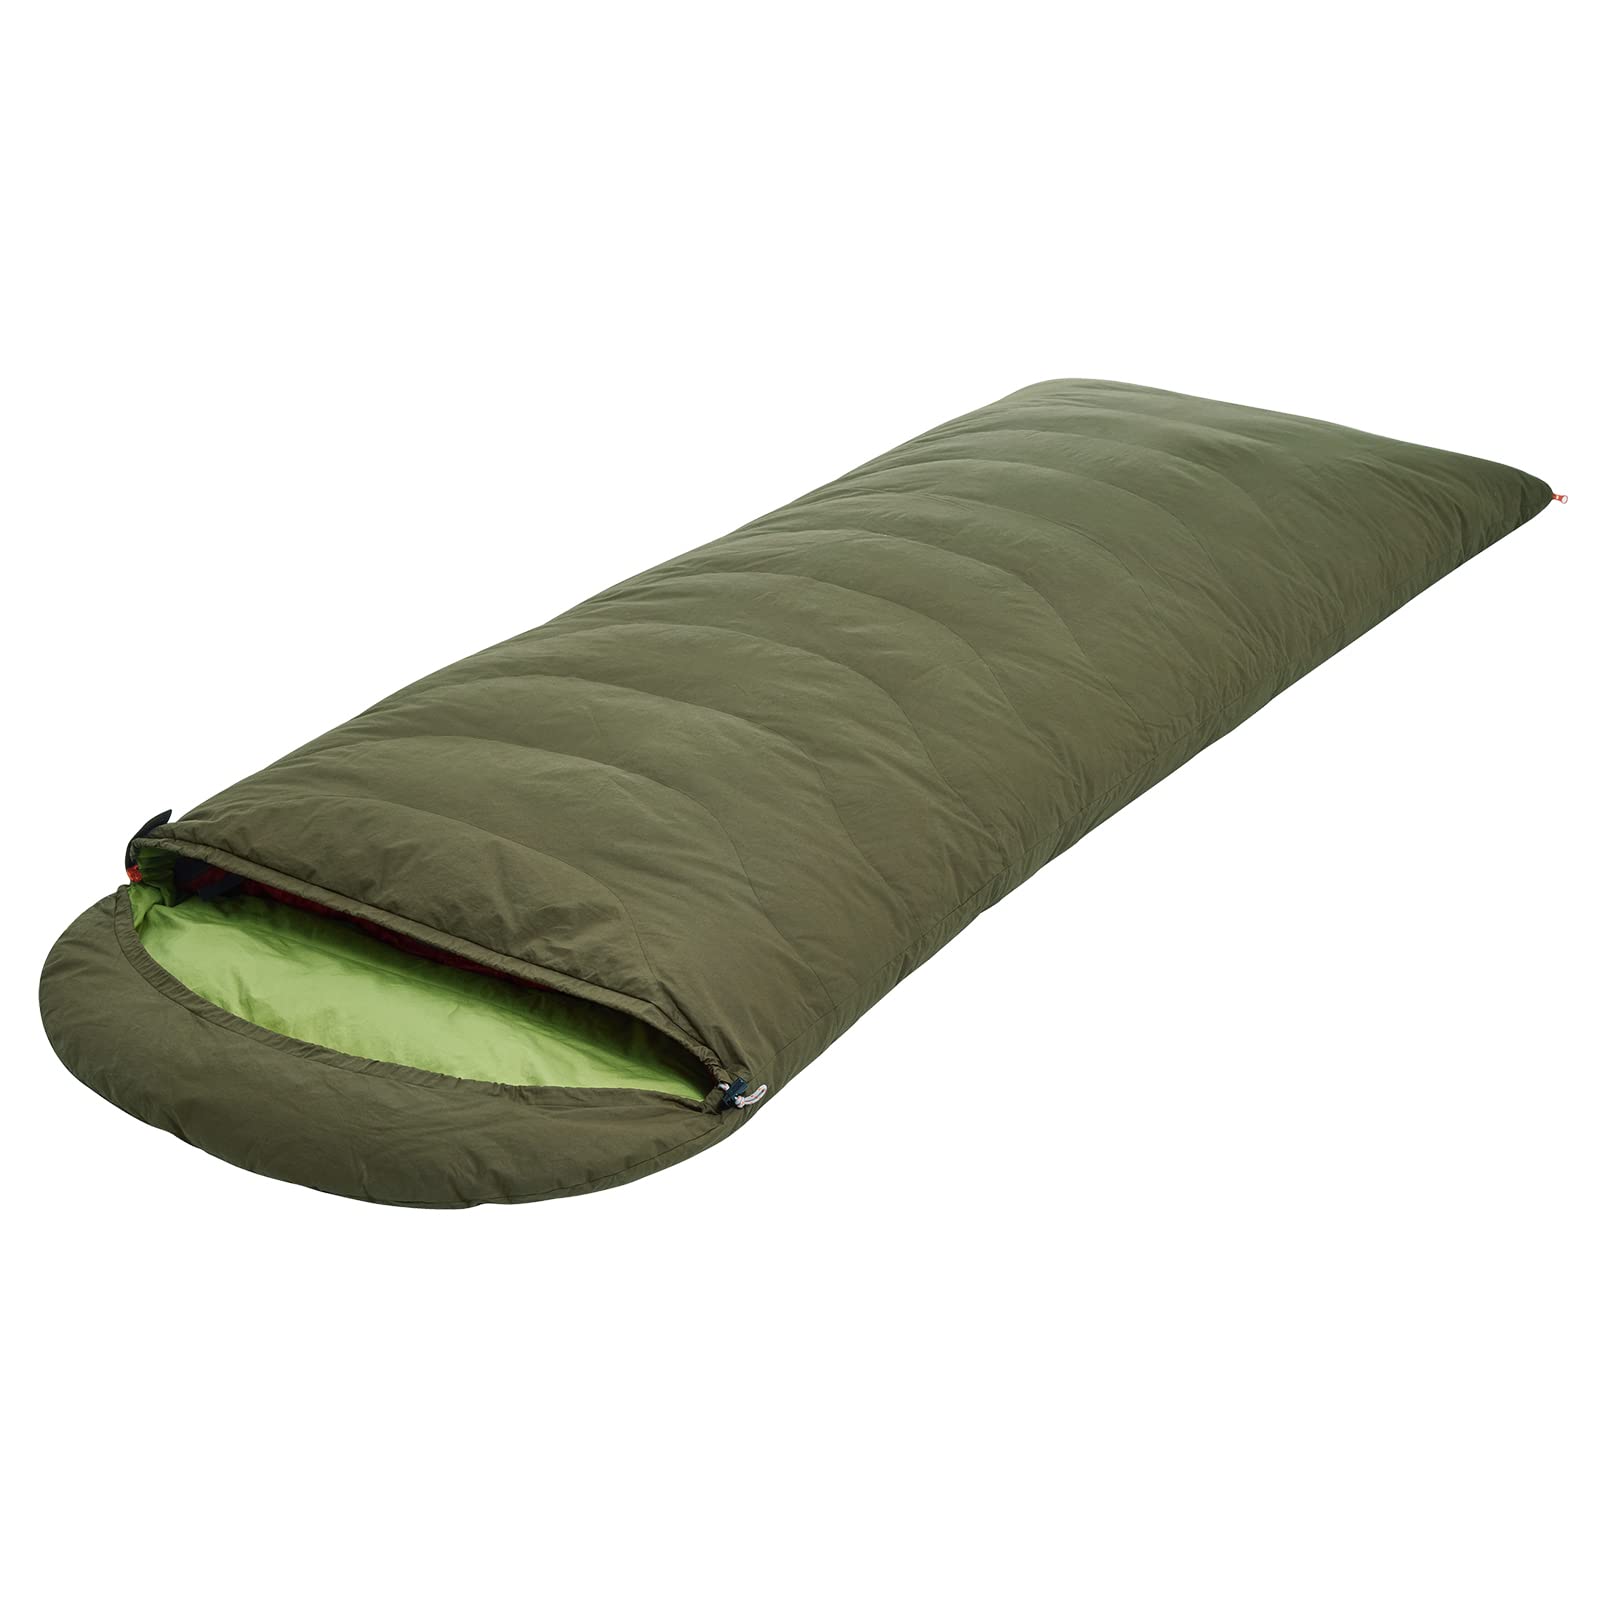 KingCamp sleeping bag